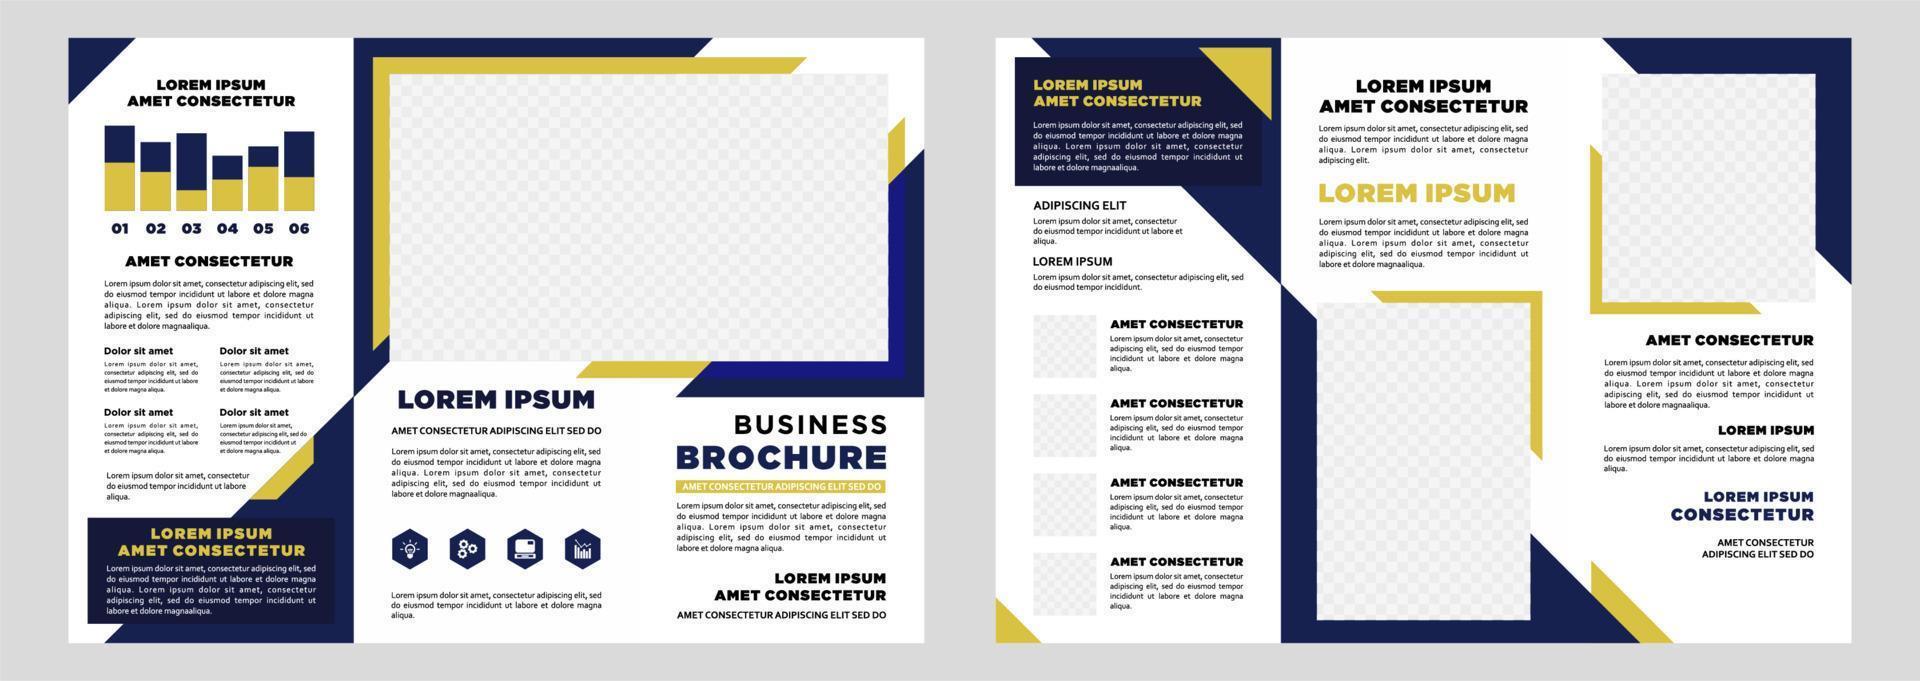 Minimalist business digital marketing trifold brochure template vector